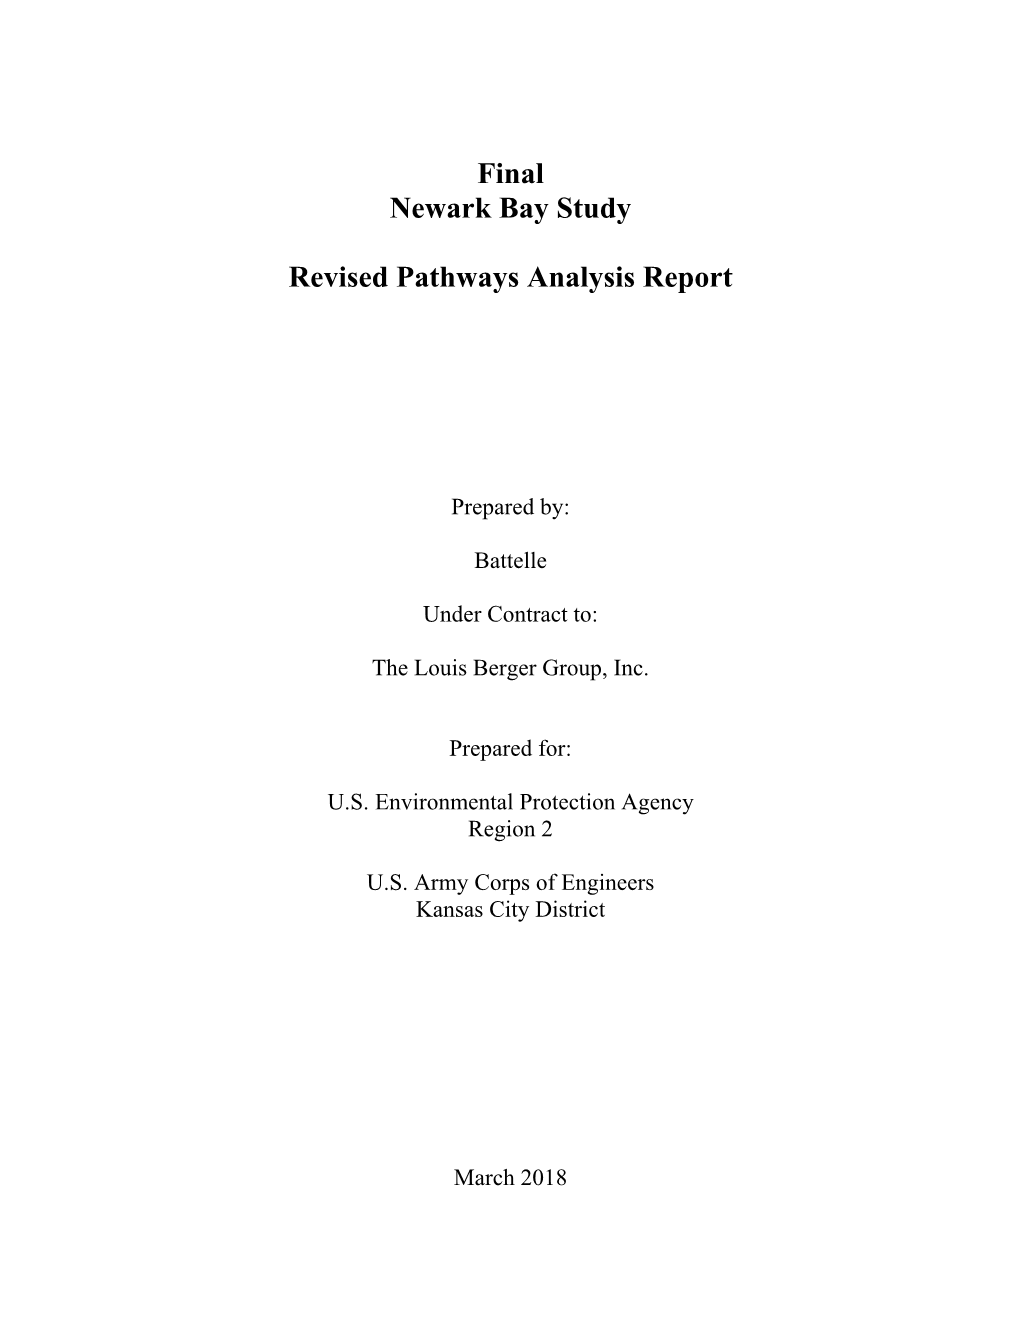 Final Newark Bay Study Revised Pathways Analysis Report